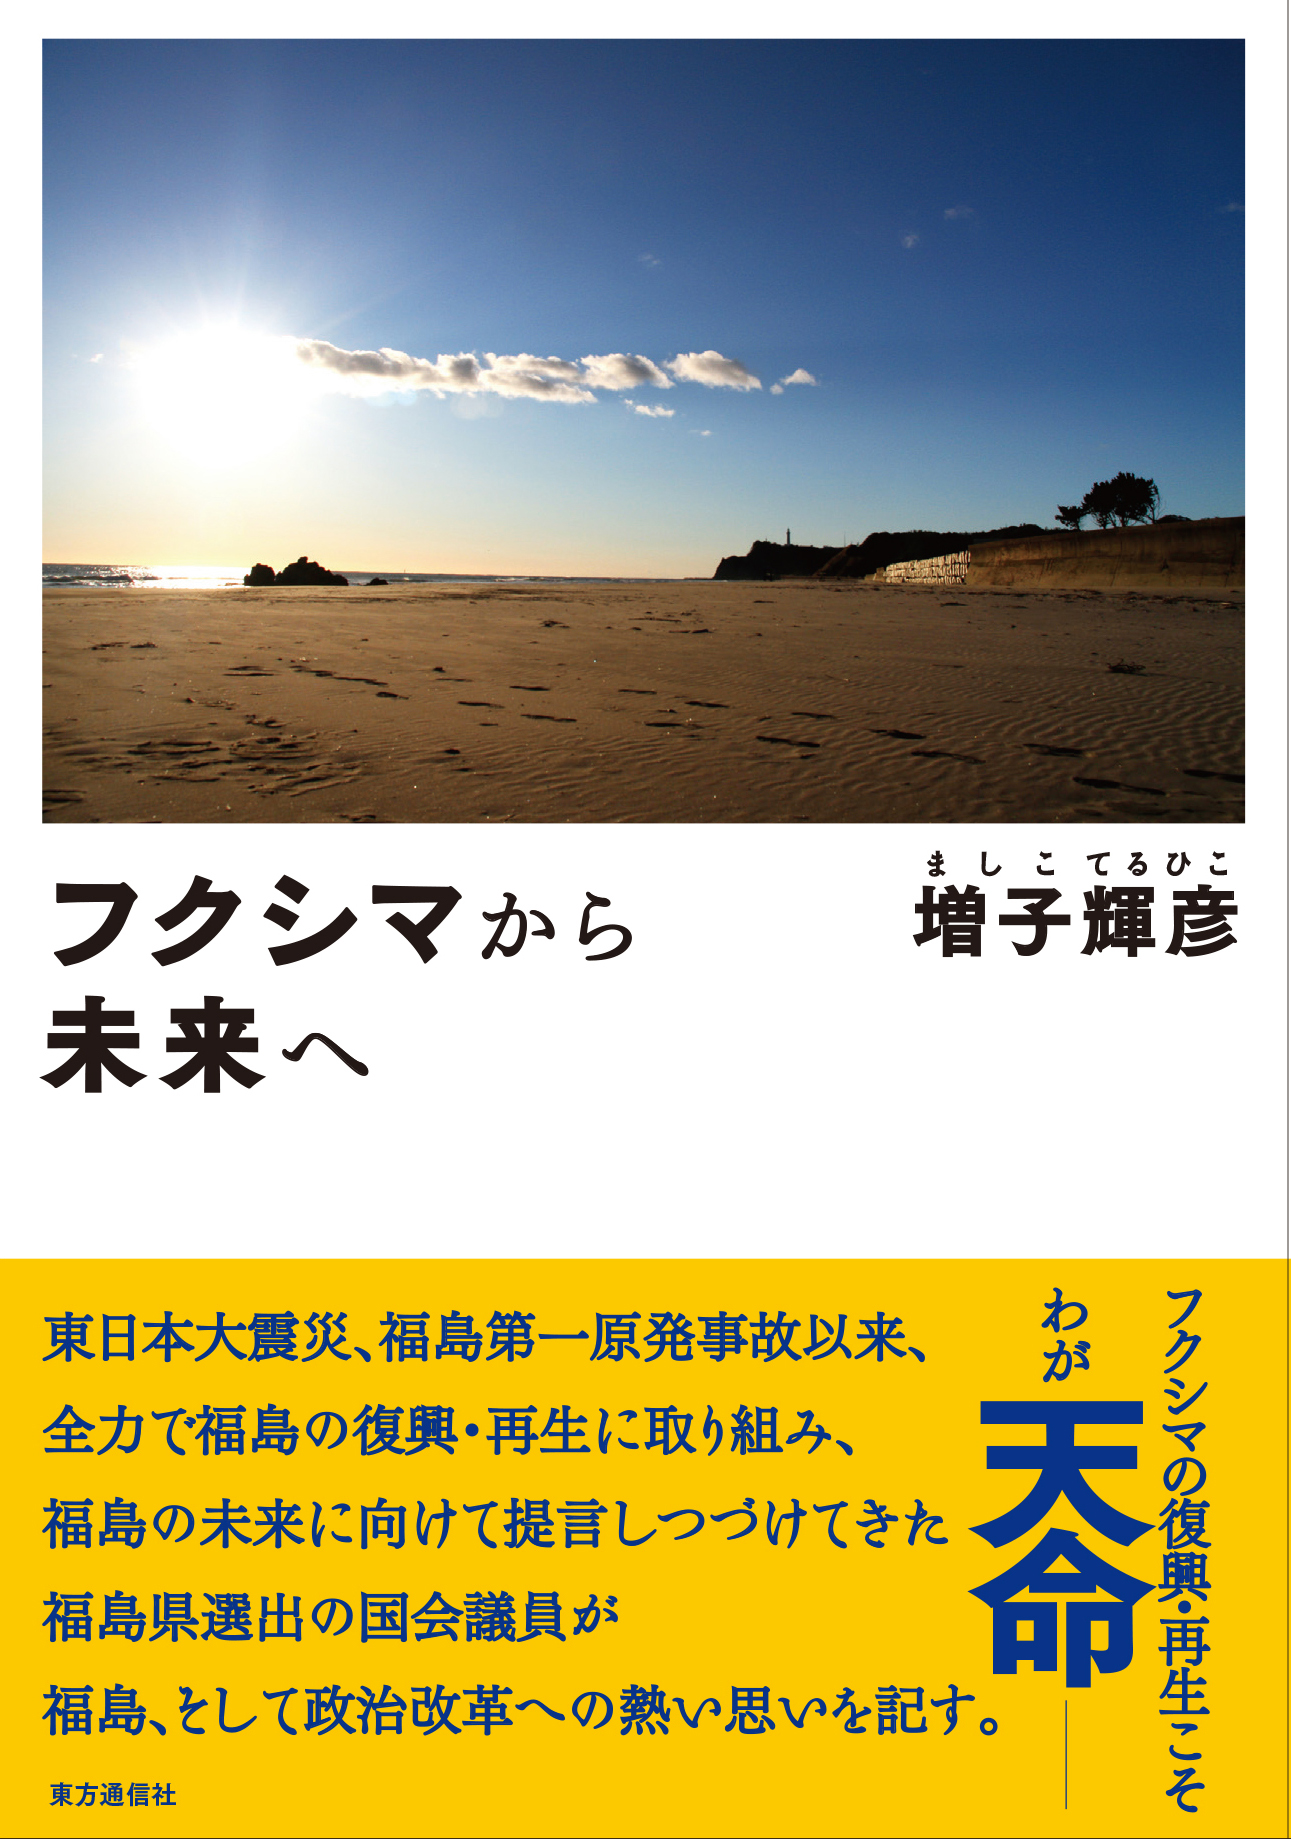 fukushimamirai_cover_presen_fin.indd